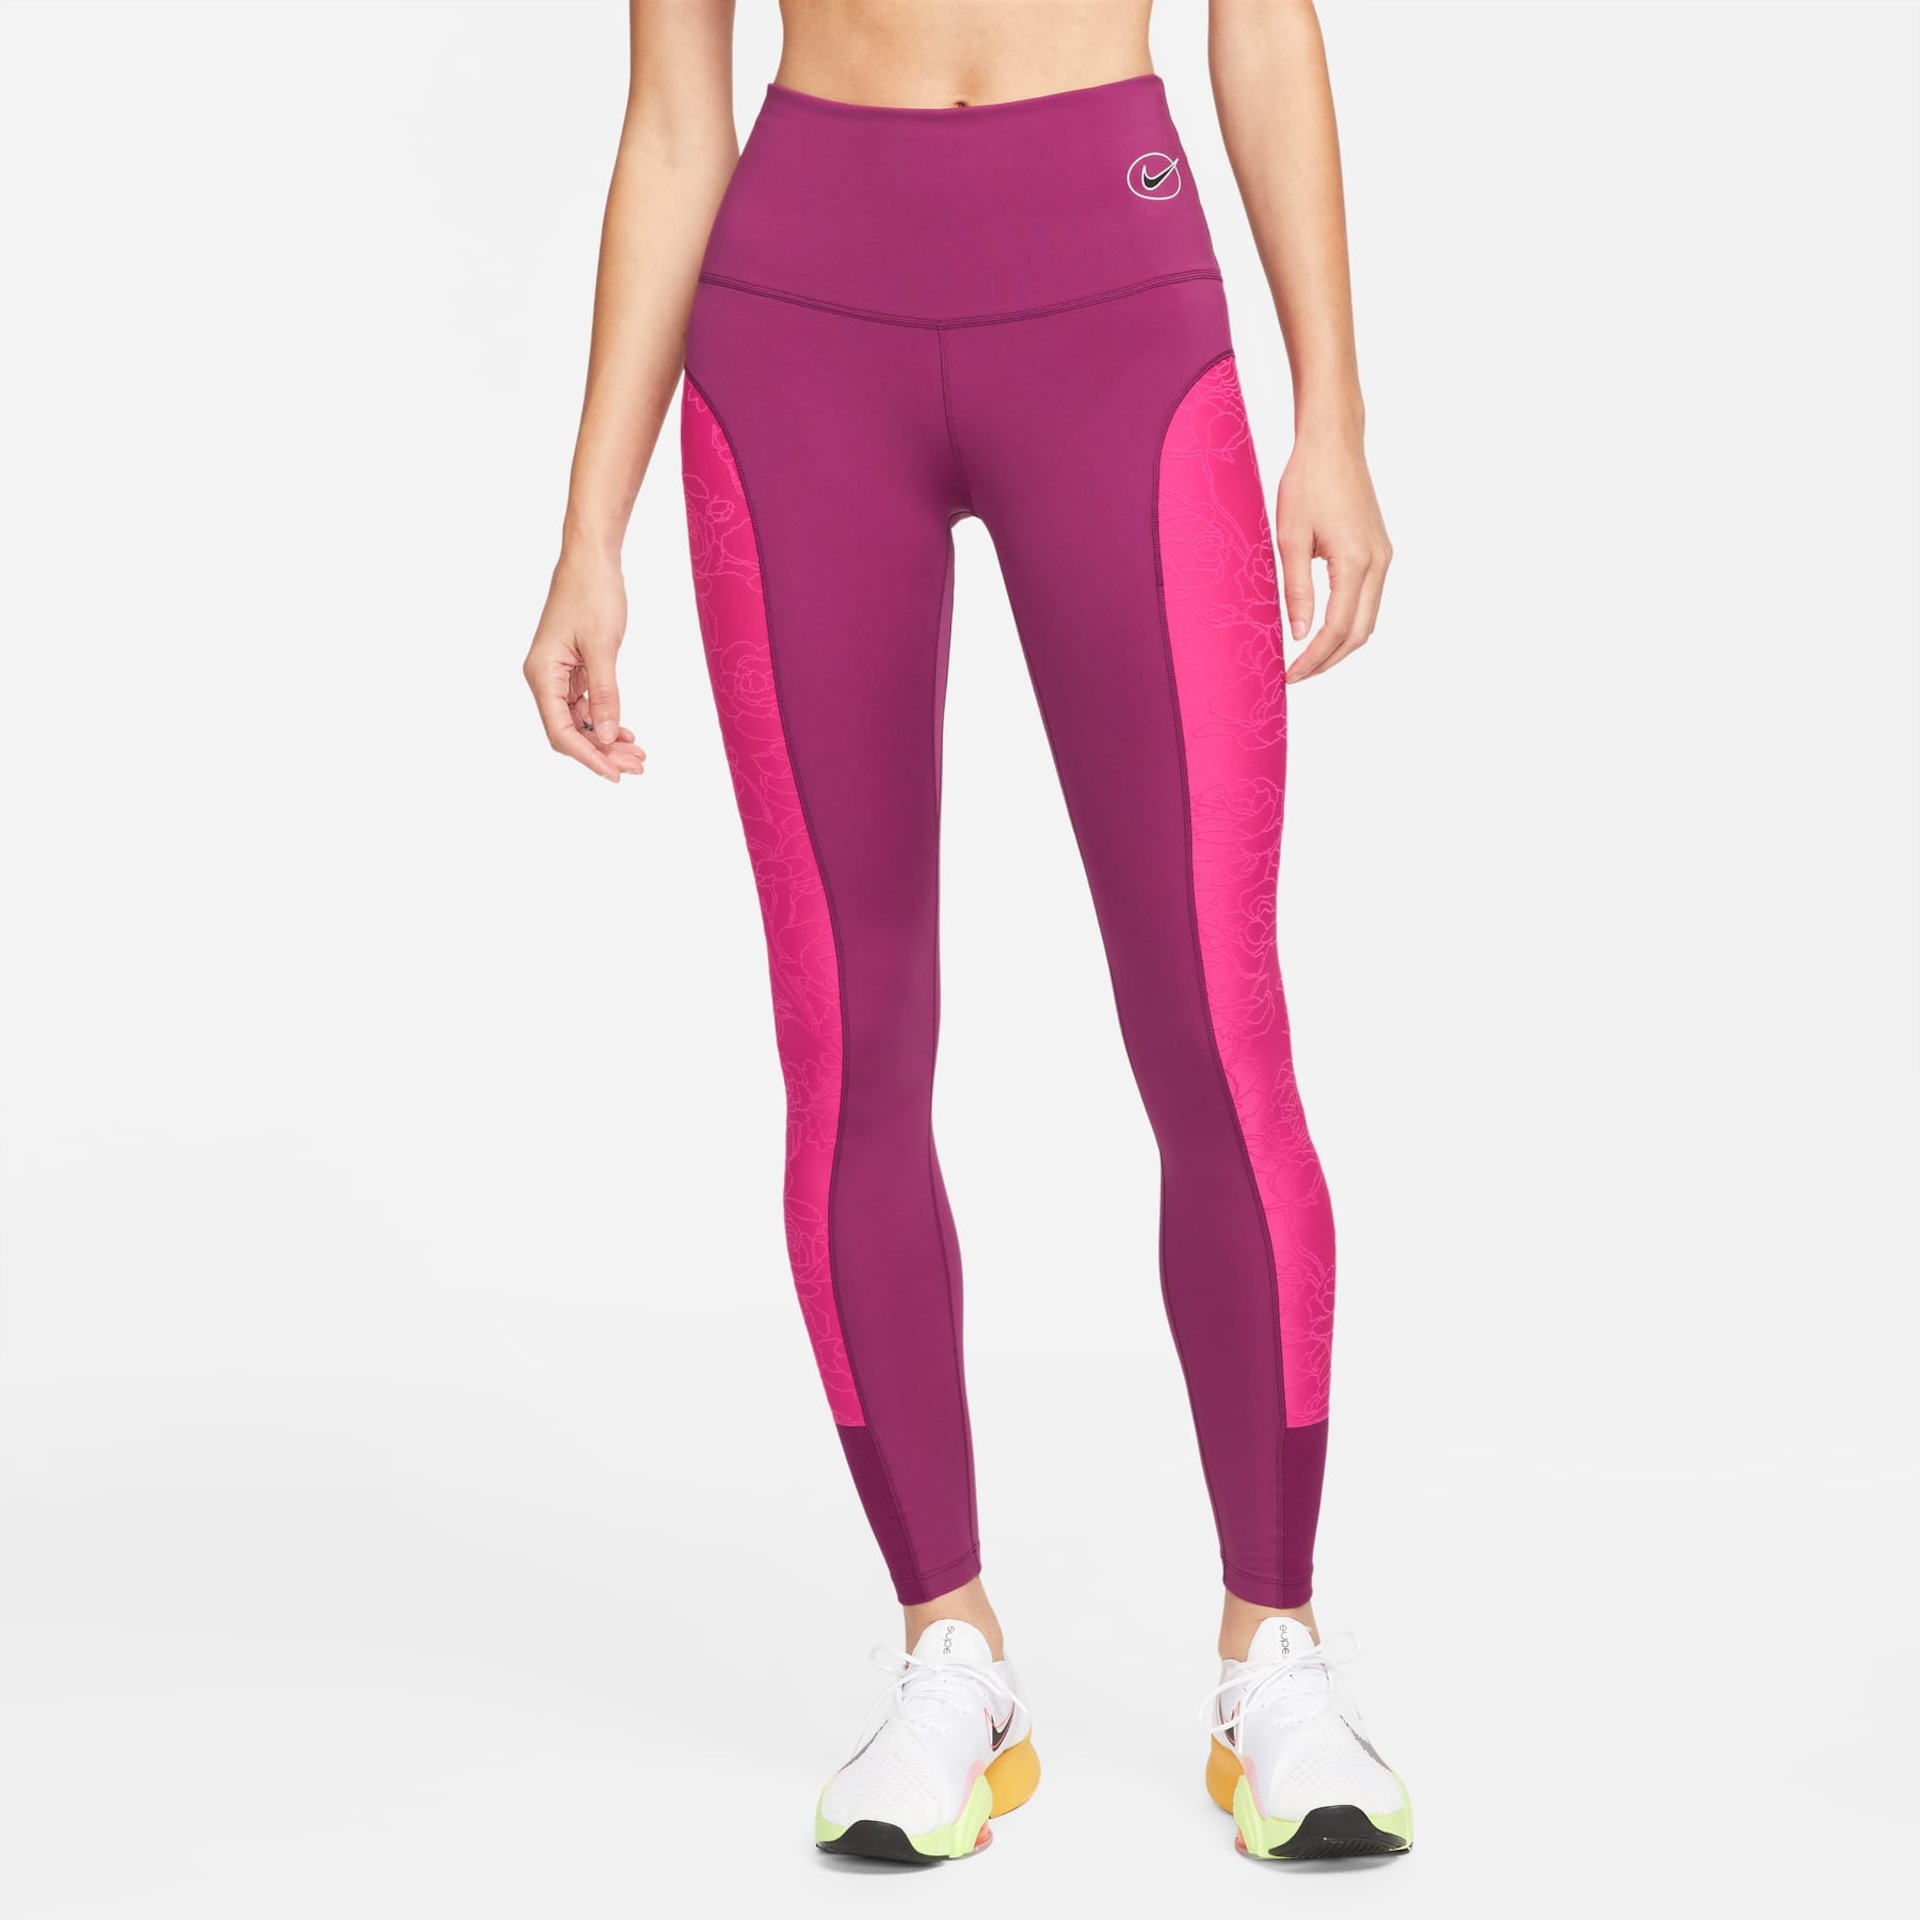 Plus Size - Calça Nike Sportswear Essential Feminina